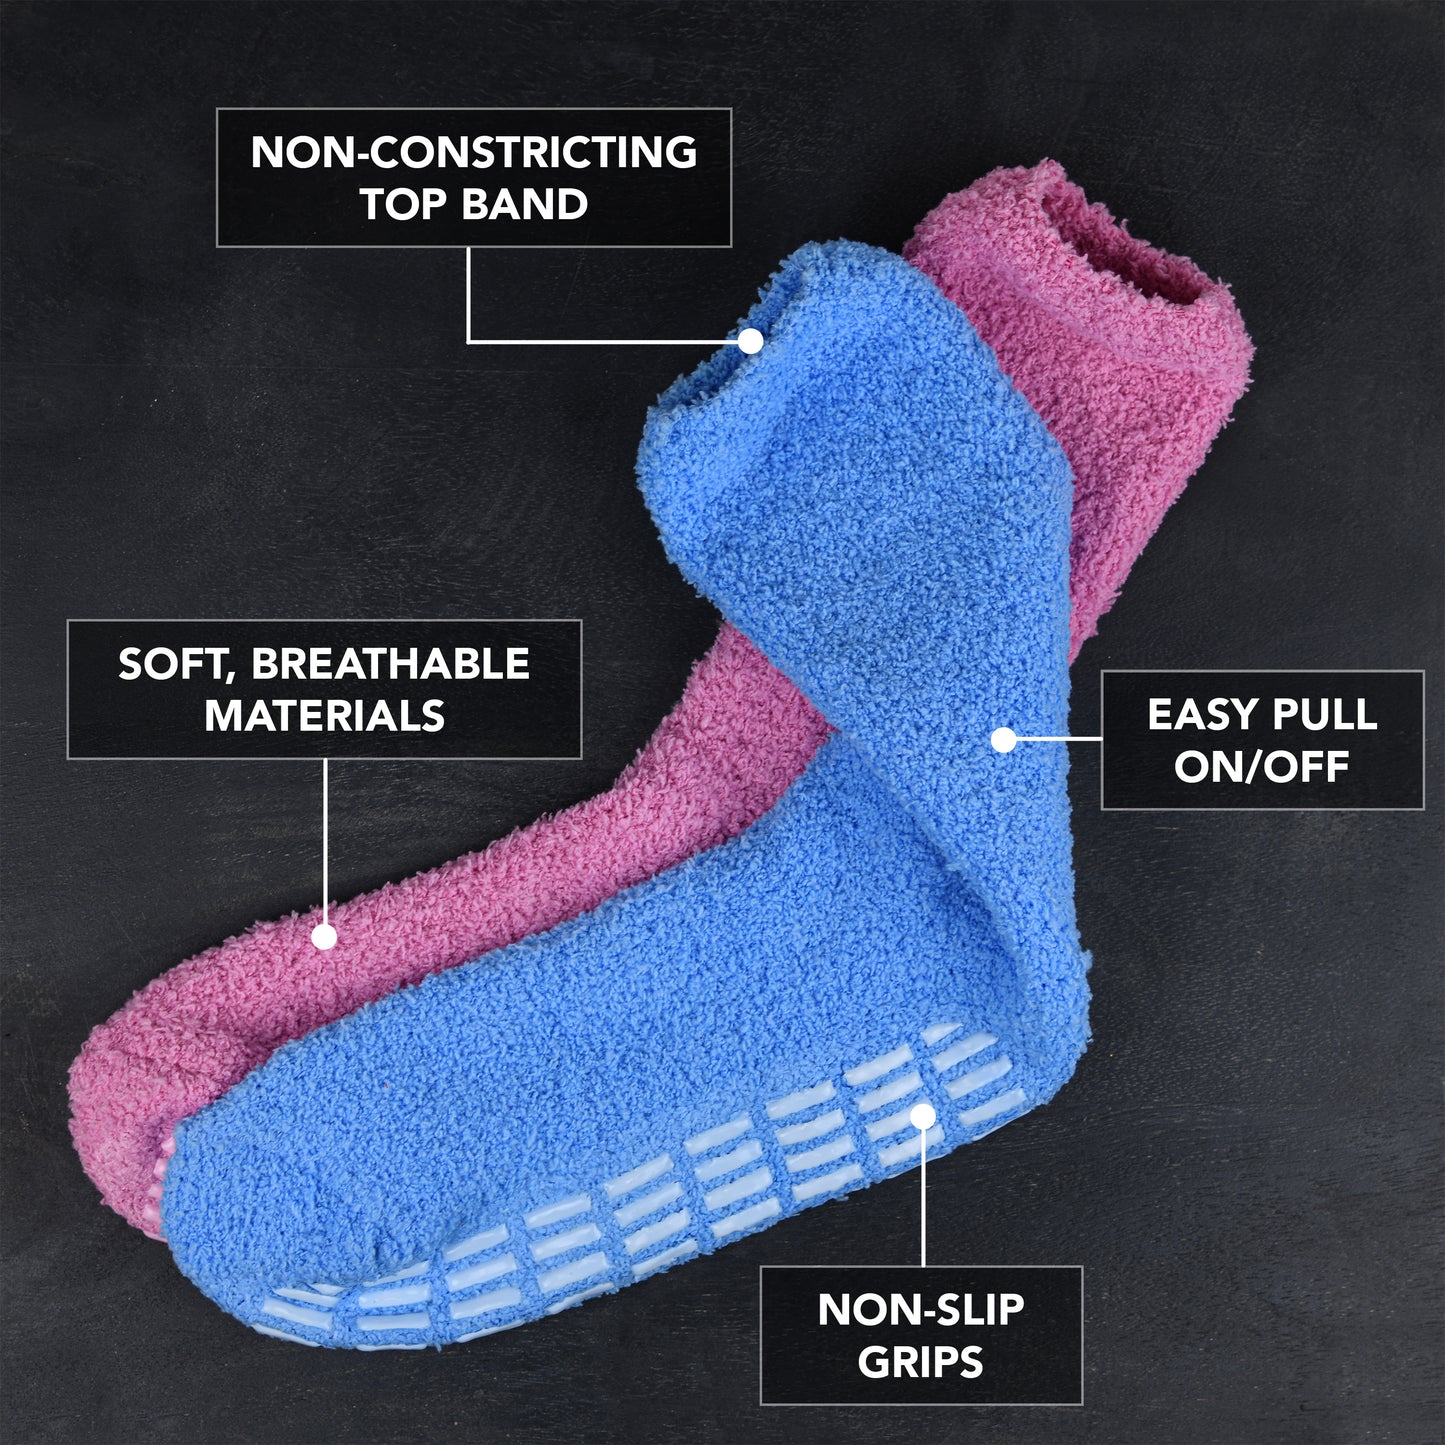 Fuzzy Hospital Socks - Non Slip Grip - 6 Pairs